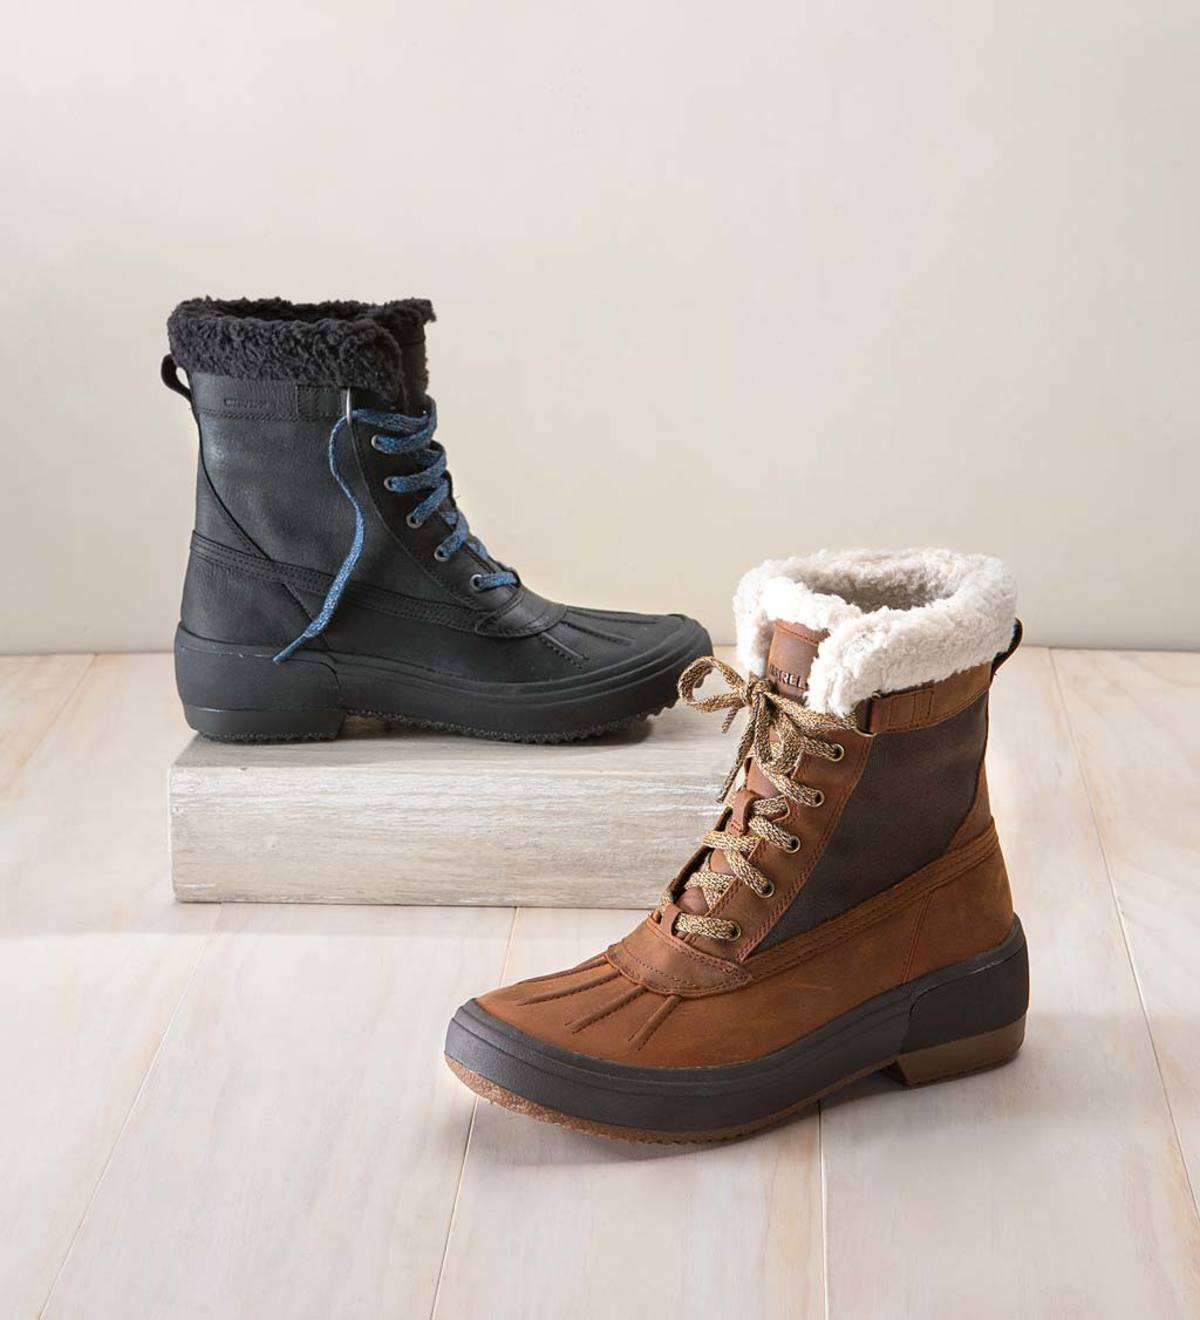 polar waterproof boots